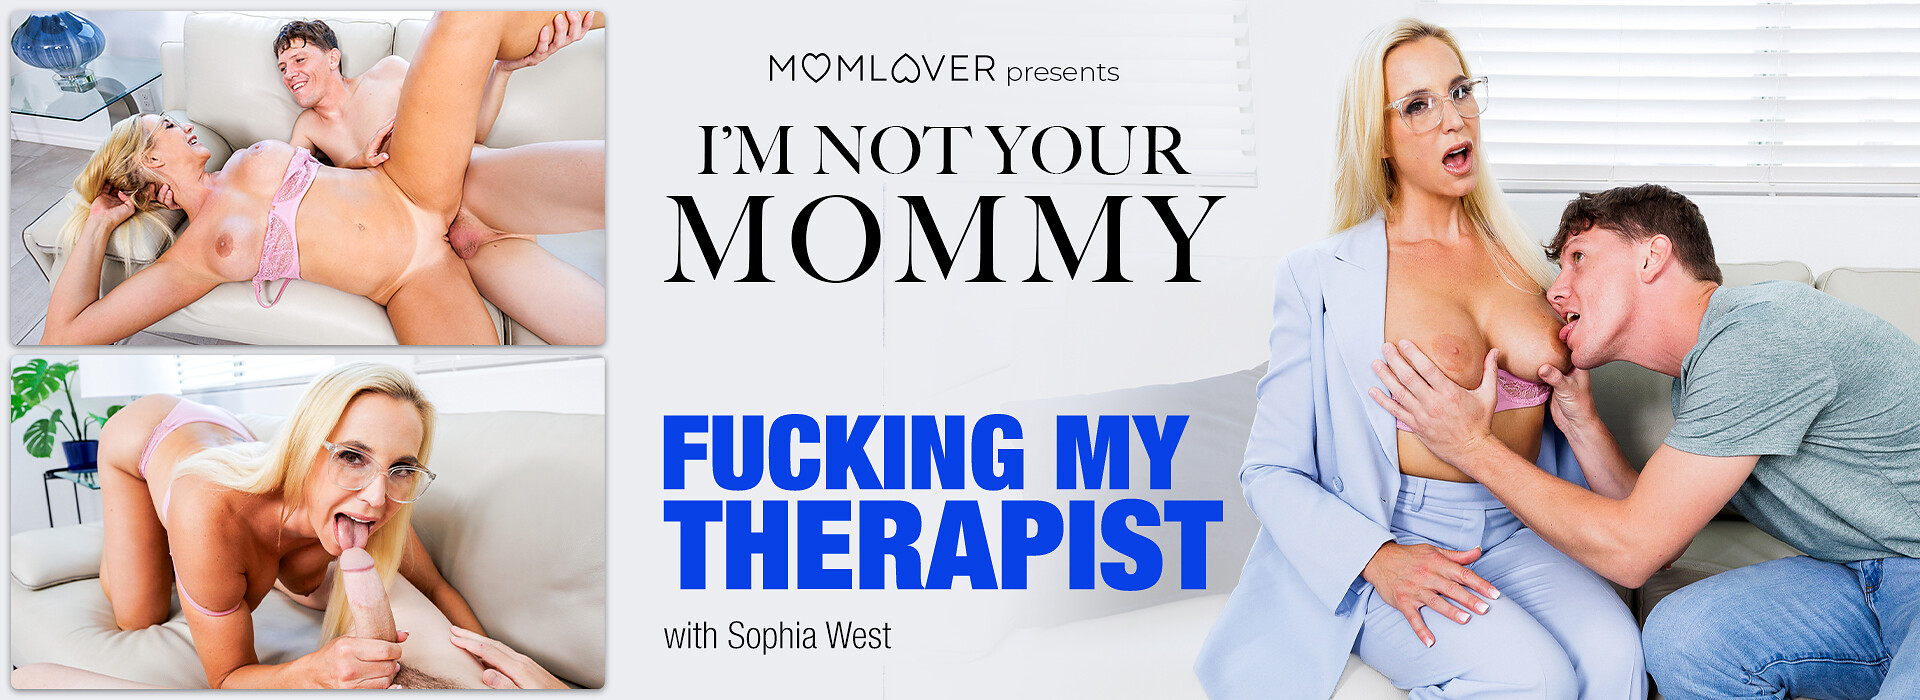 My Therapist Fucked My Problems Away